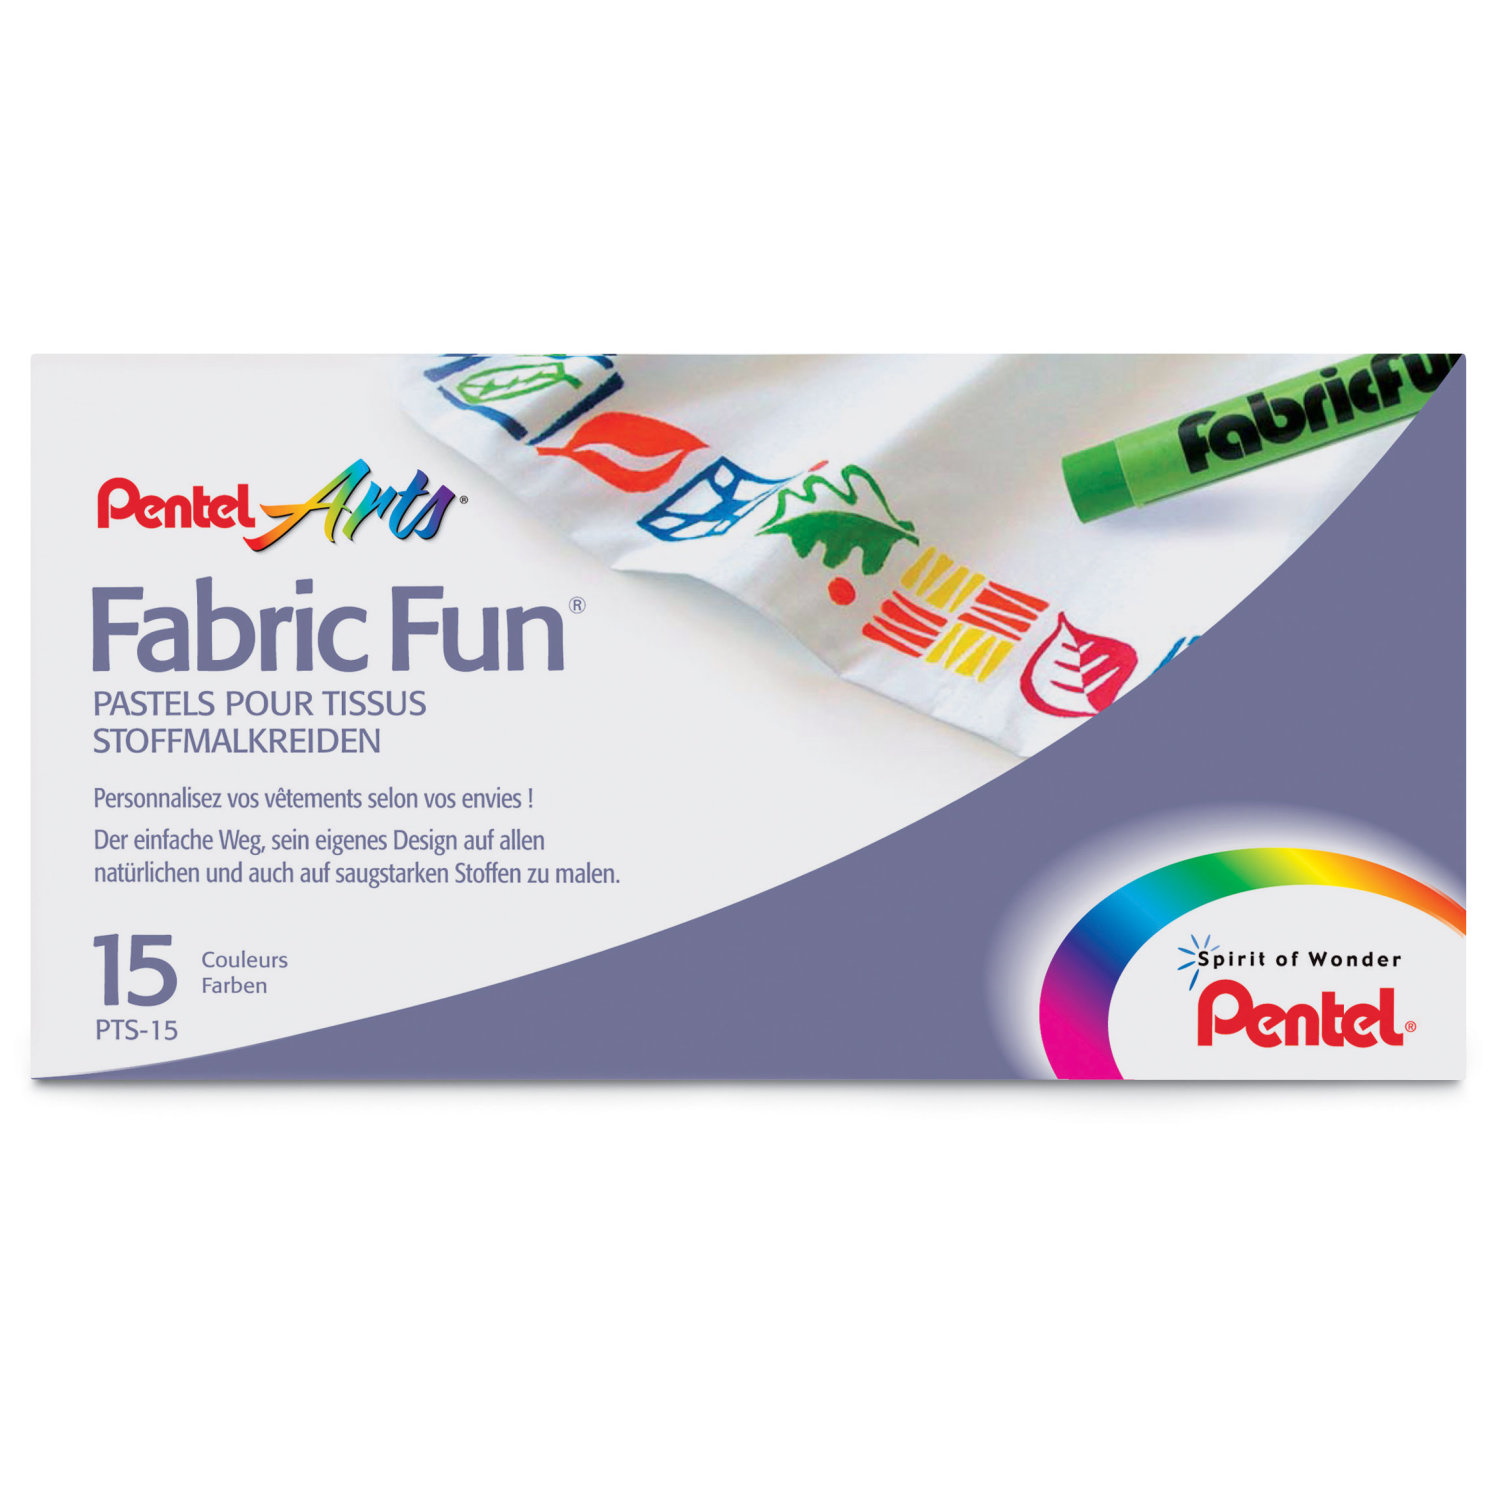 Conjunto Pastel Fabric Fun Pentel Arts pentel